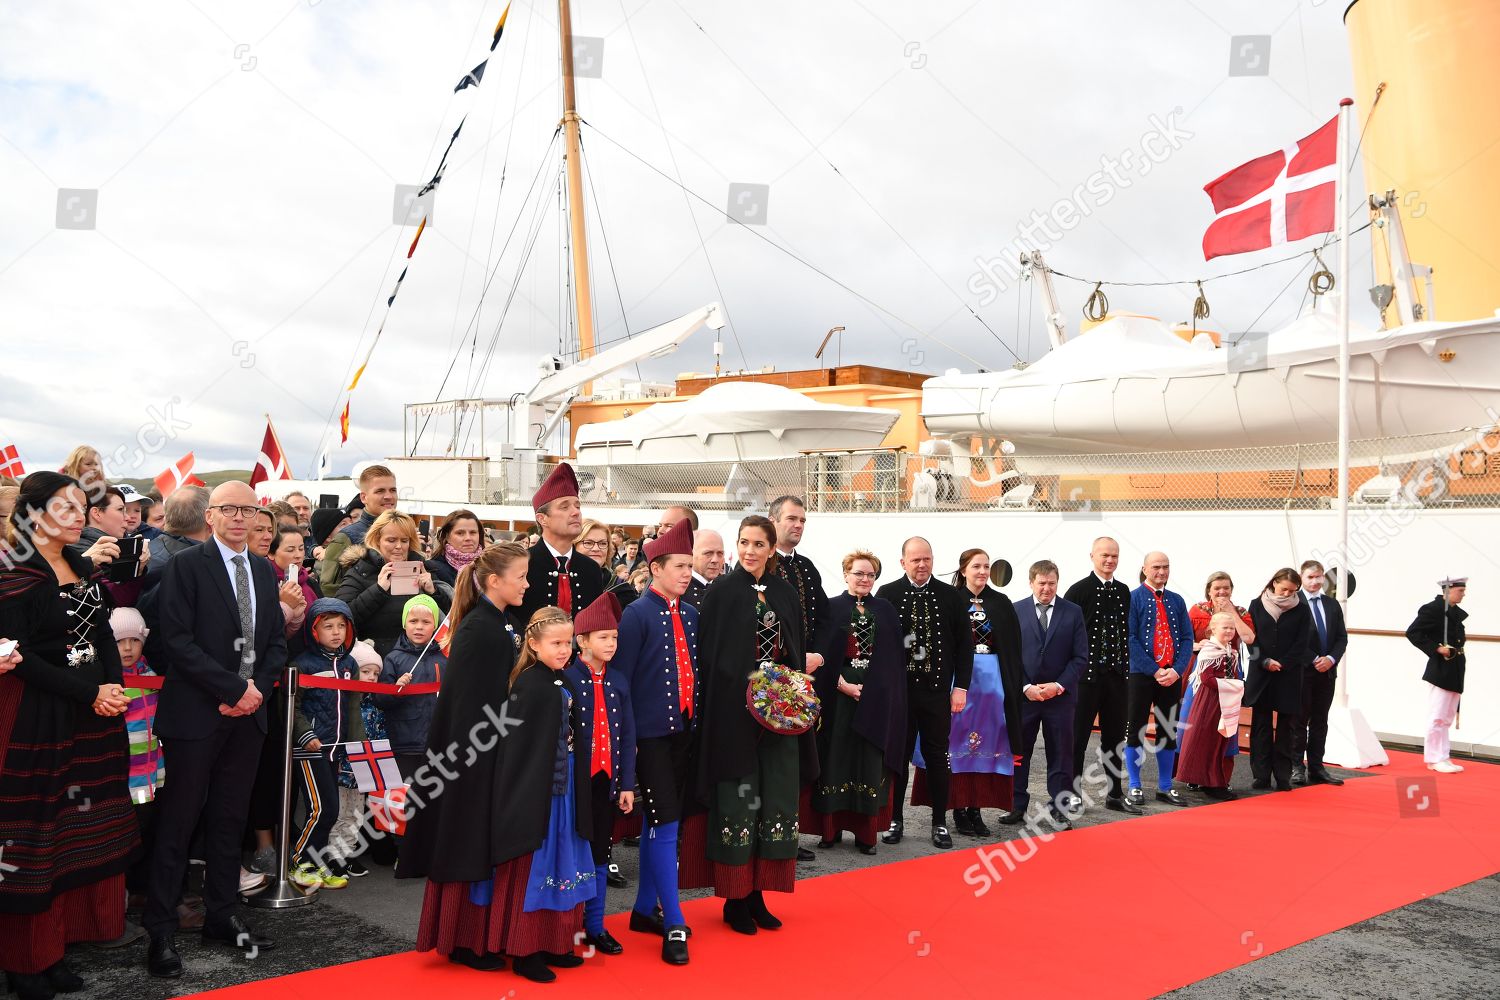 danish-royals-visit-to-the-faroe-islands-denmark-shutterstock-editorial-9807700r.jpg